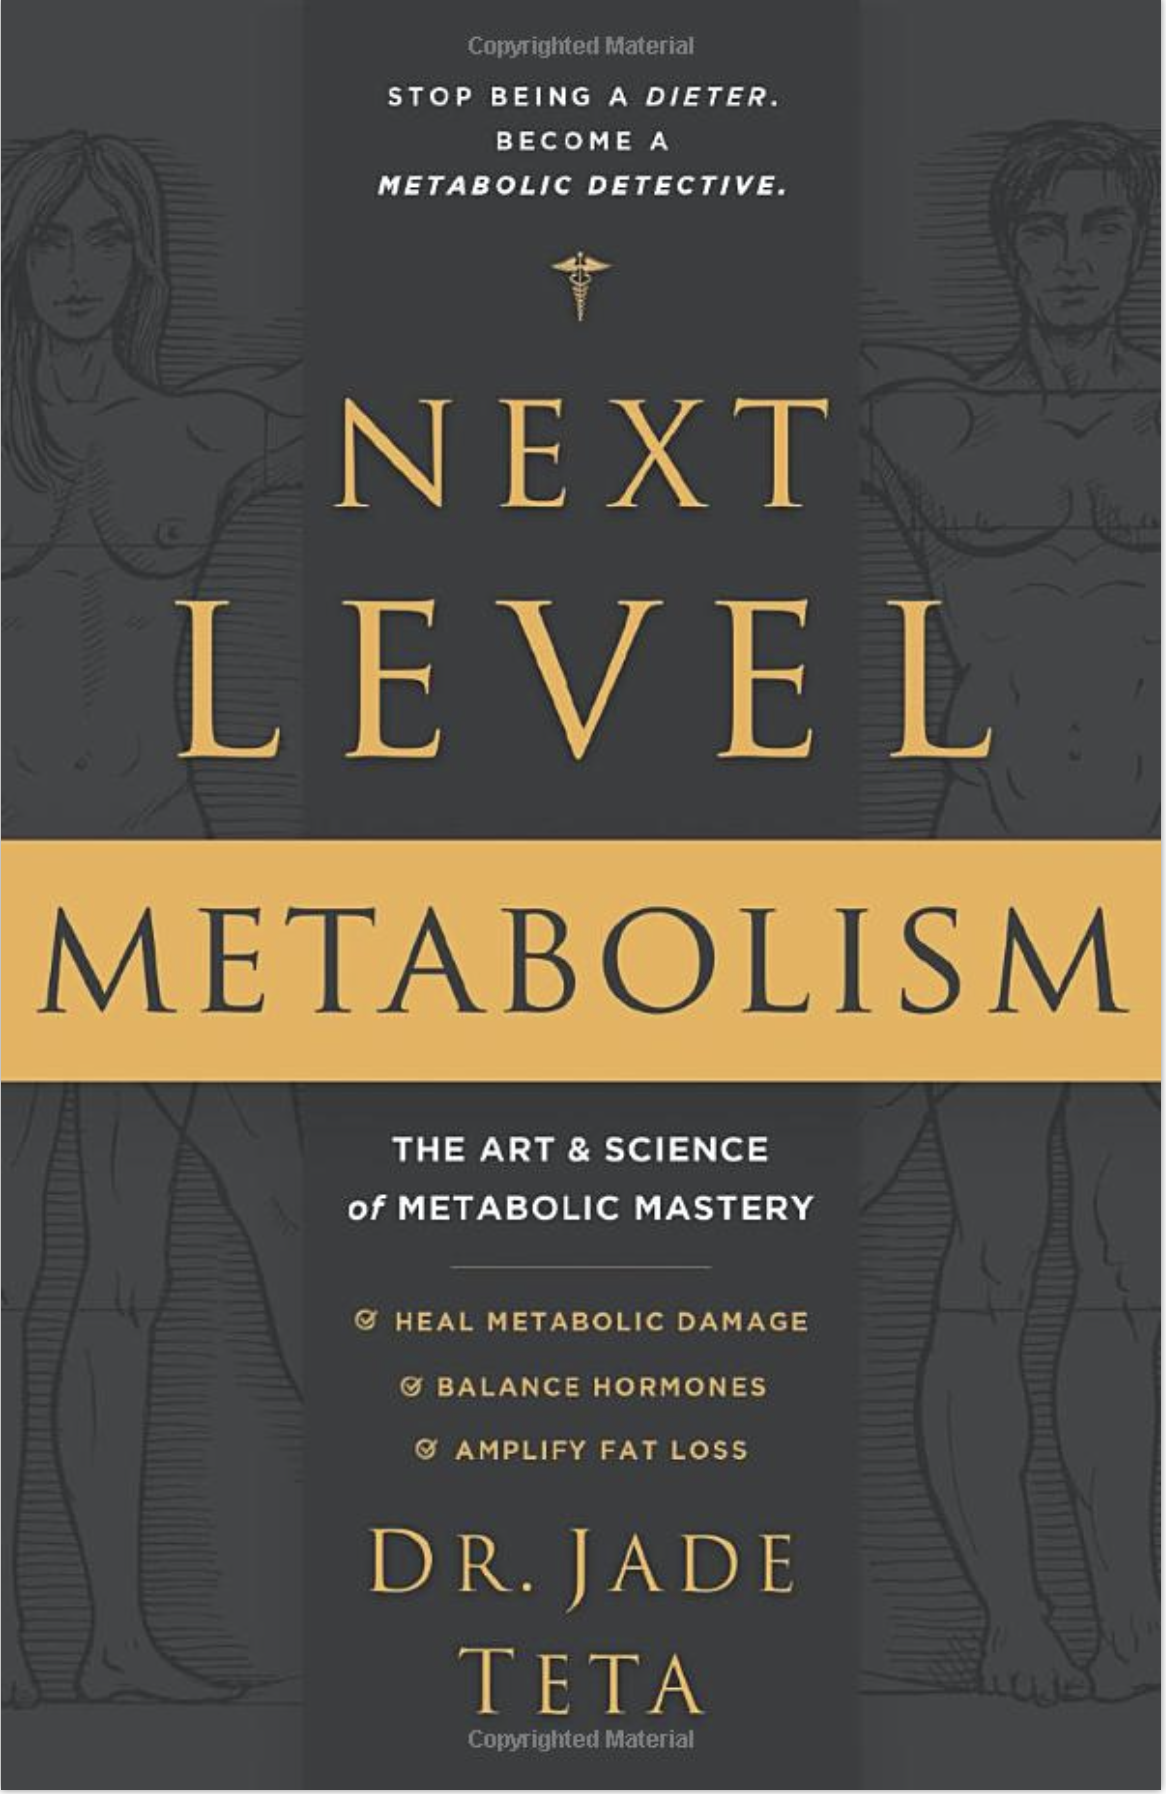 Next level metabolism